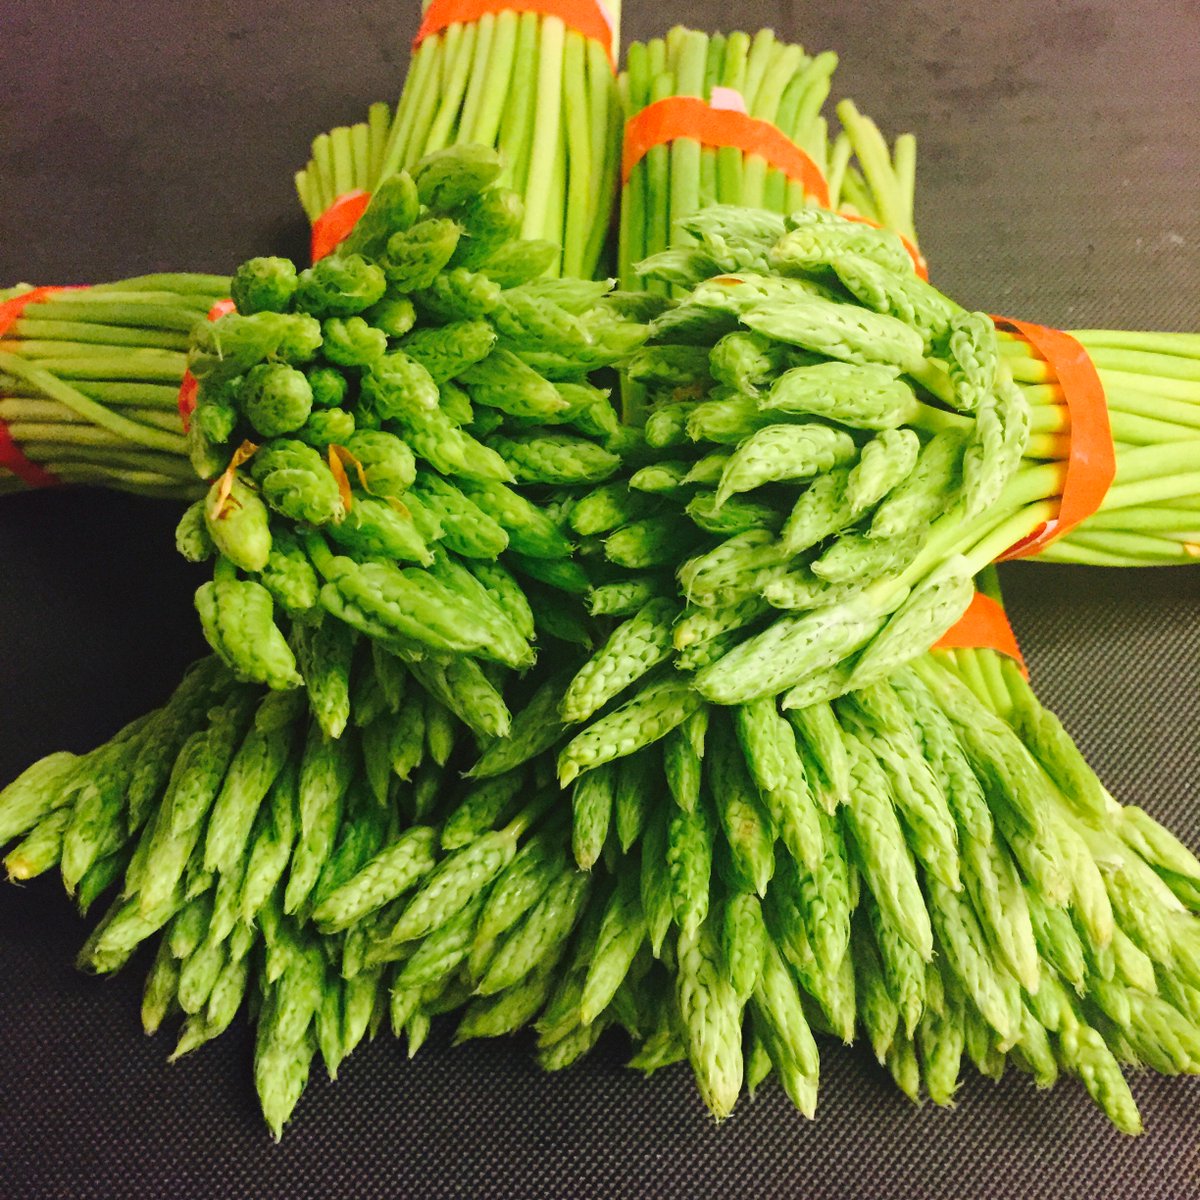 The first wild French asparagus of the year! #MeatlessMonday #vegetarianfood #asparagusseason #asparagus #FelidiaNYC #bbhg #nyceats